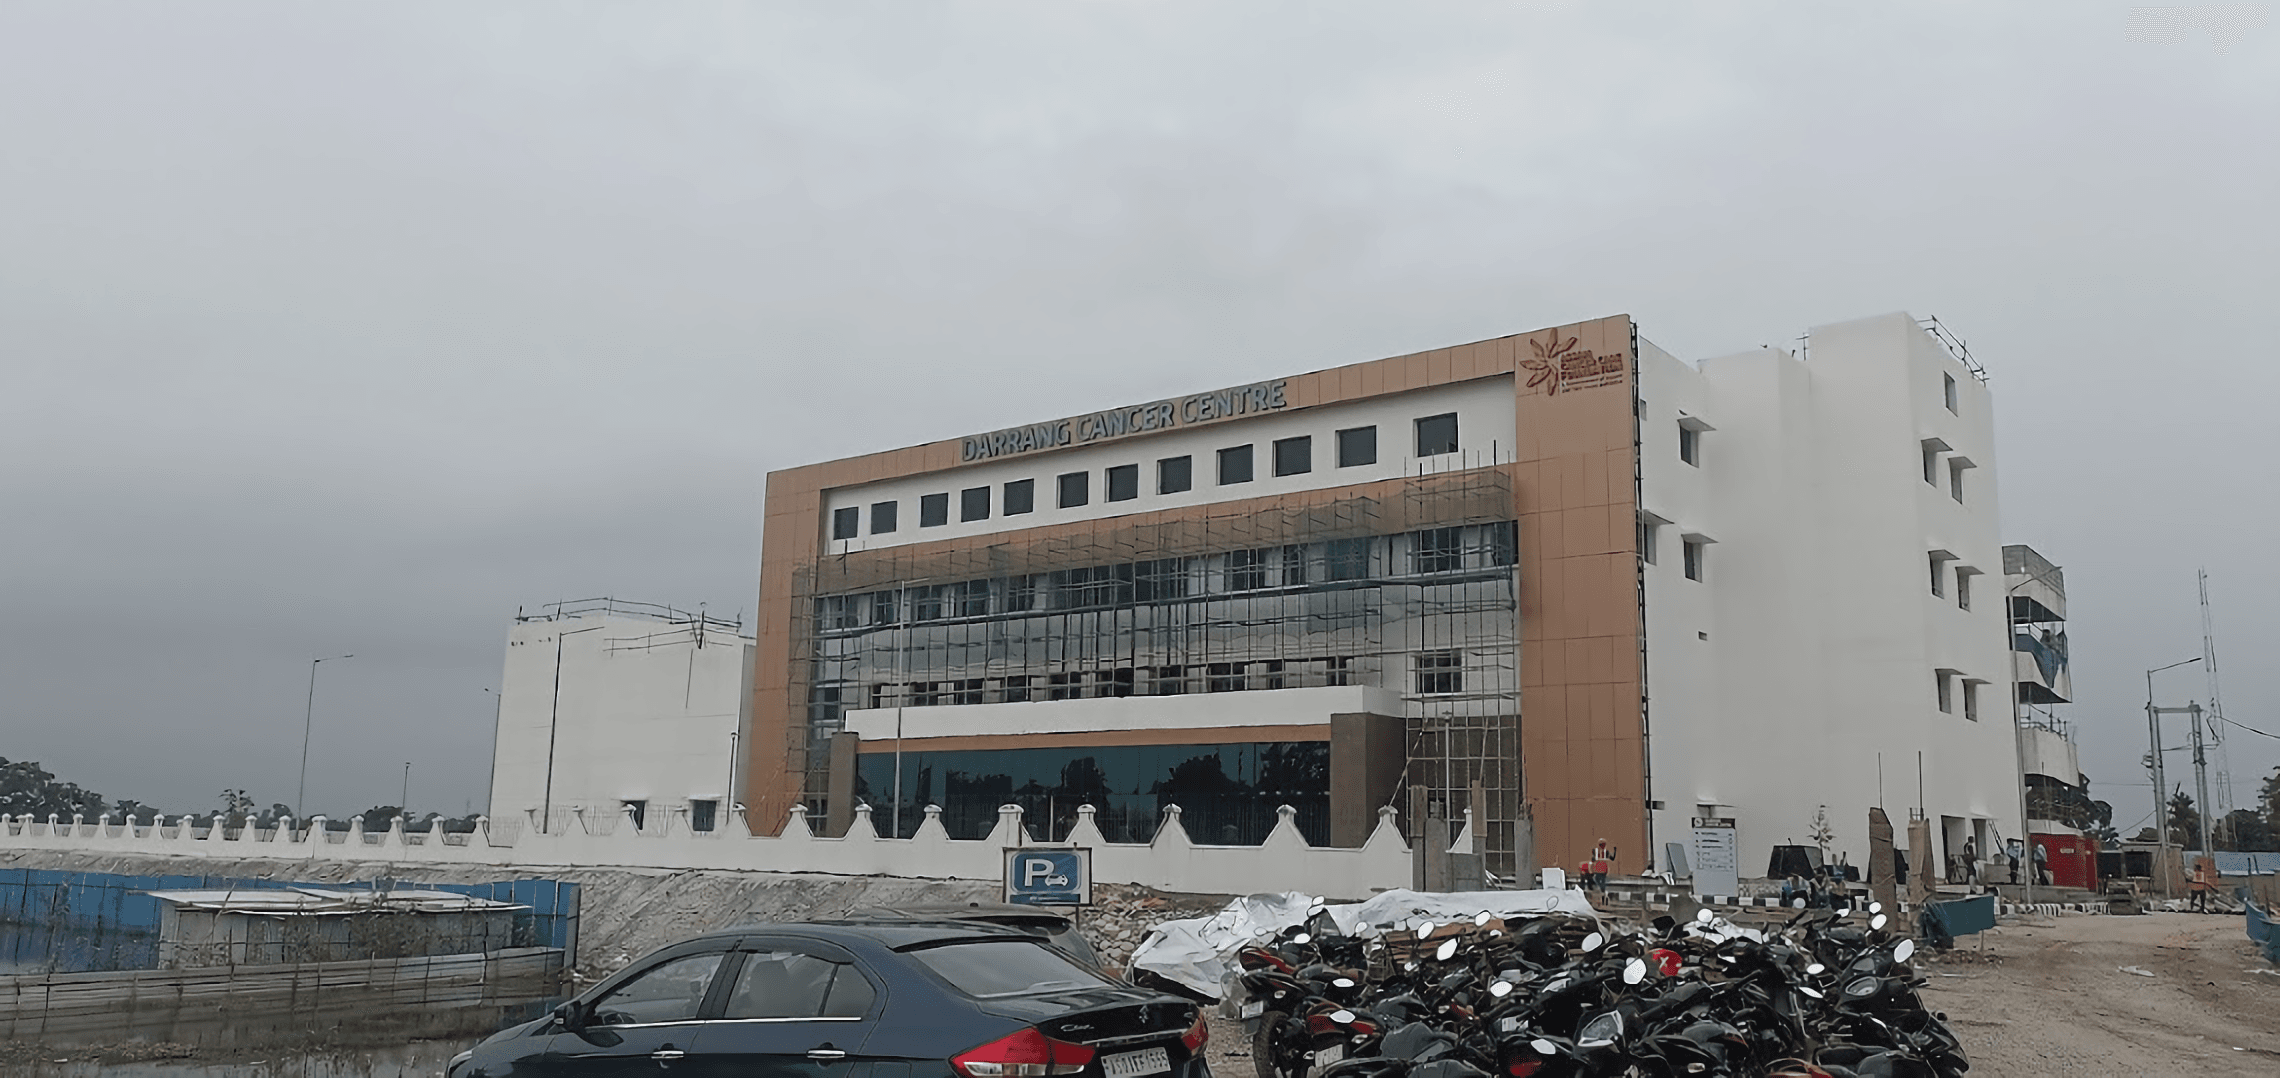 Darrang Cancer Centre